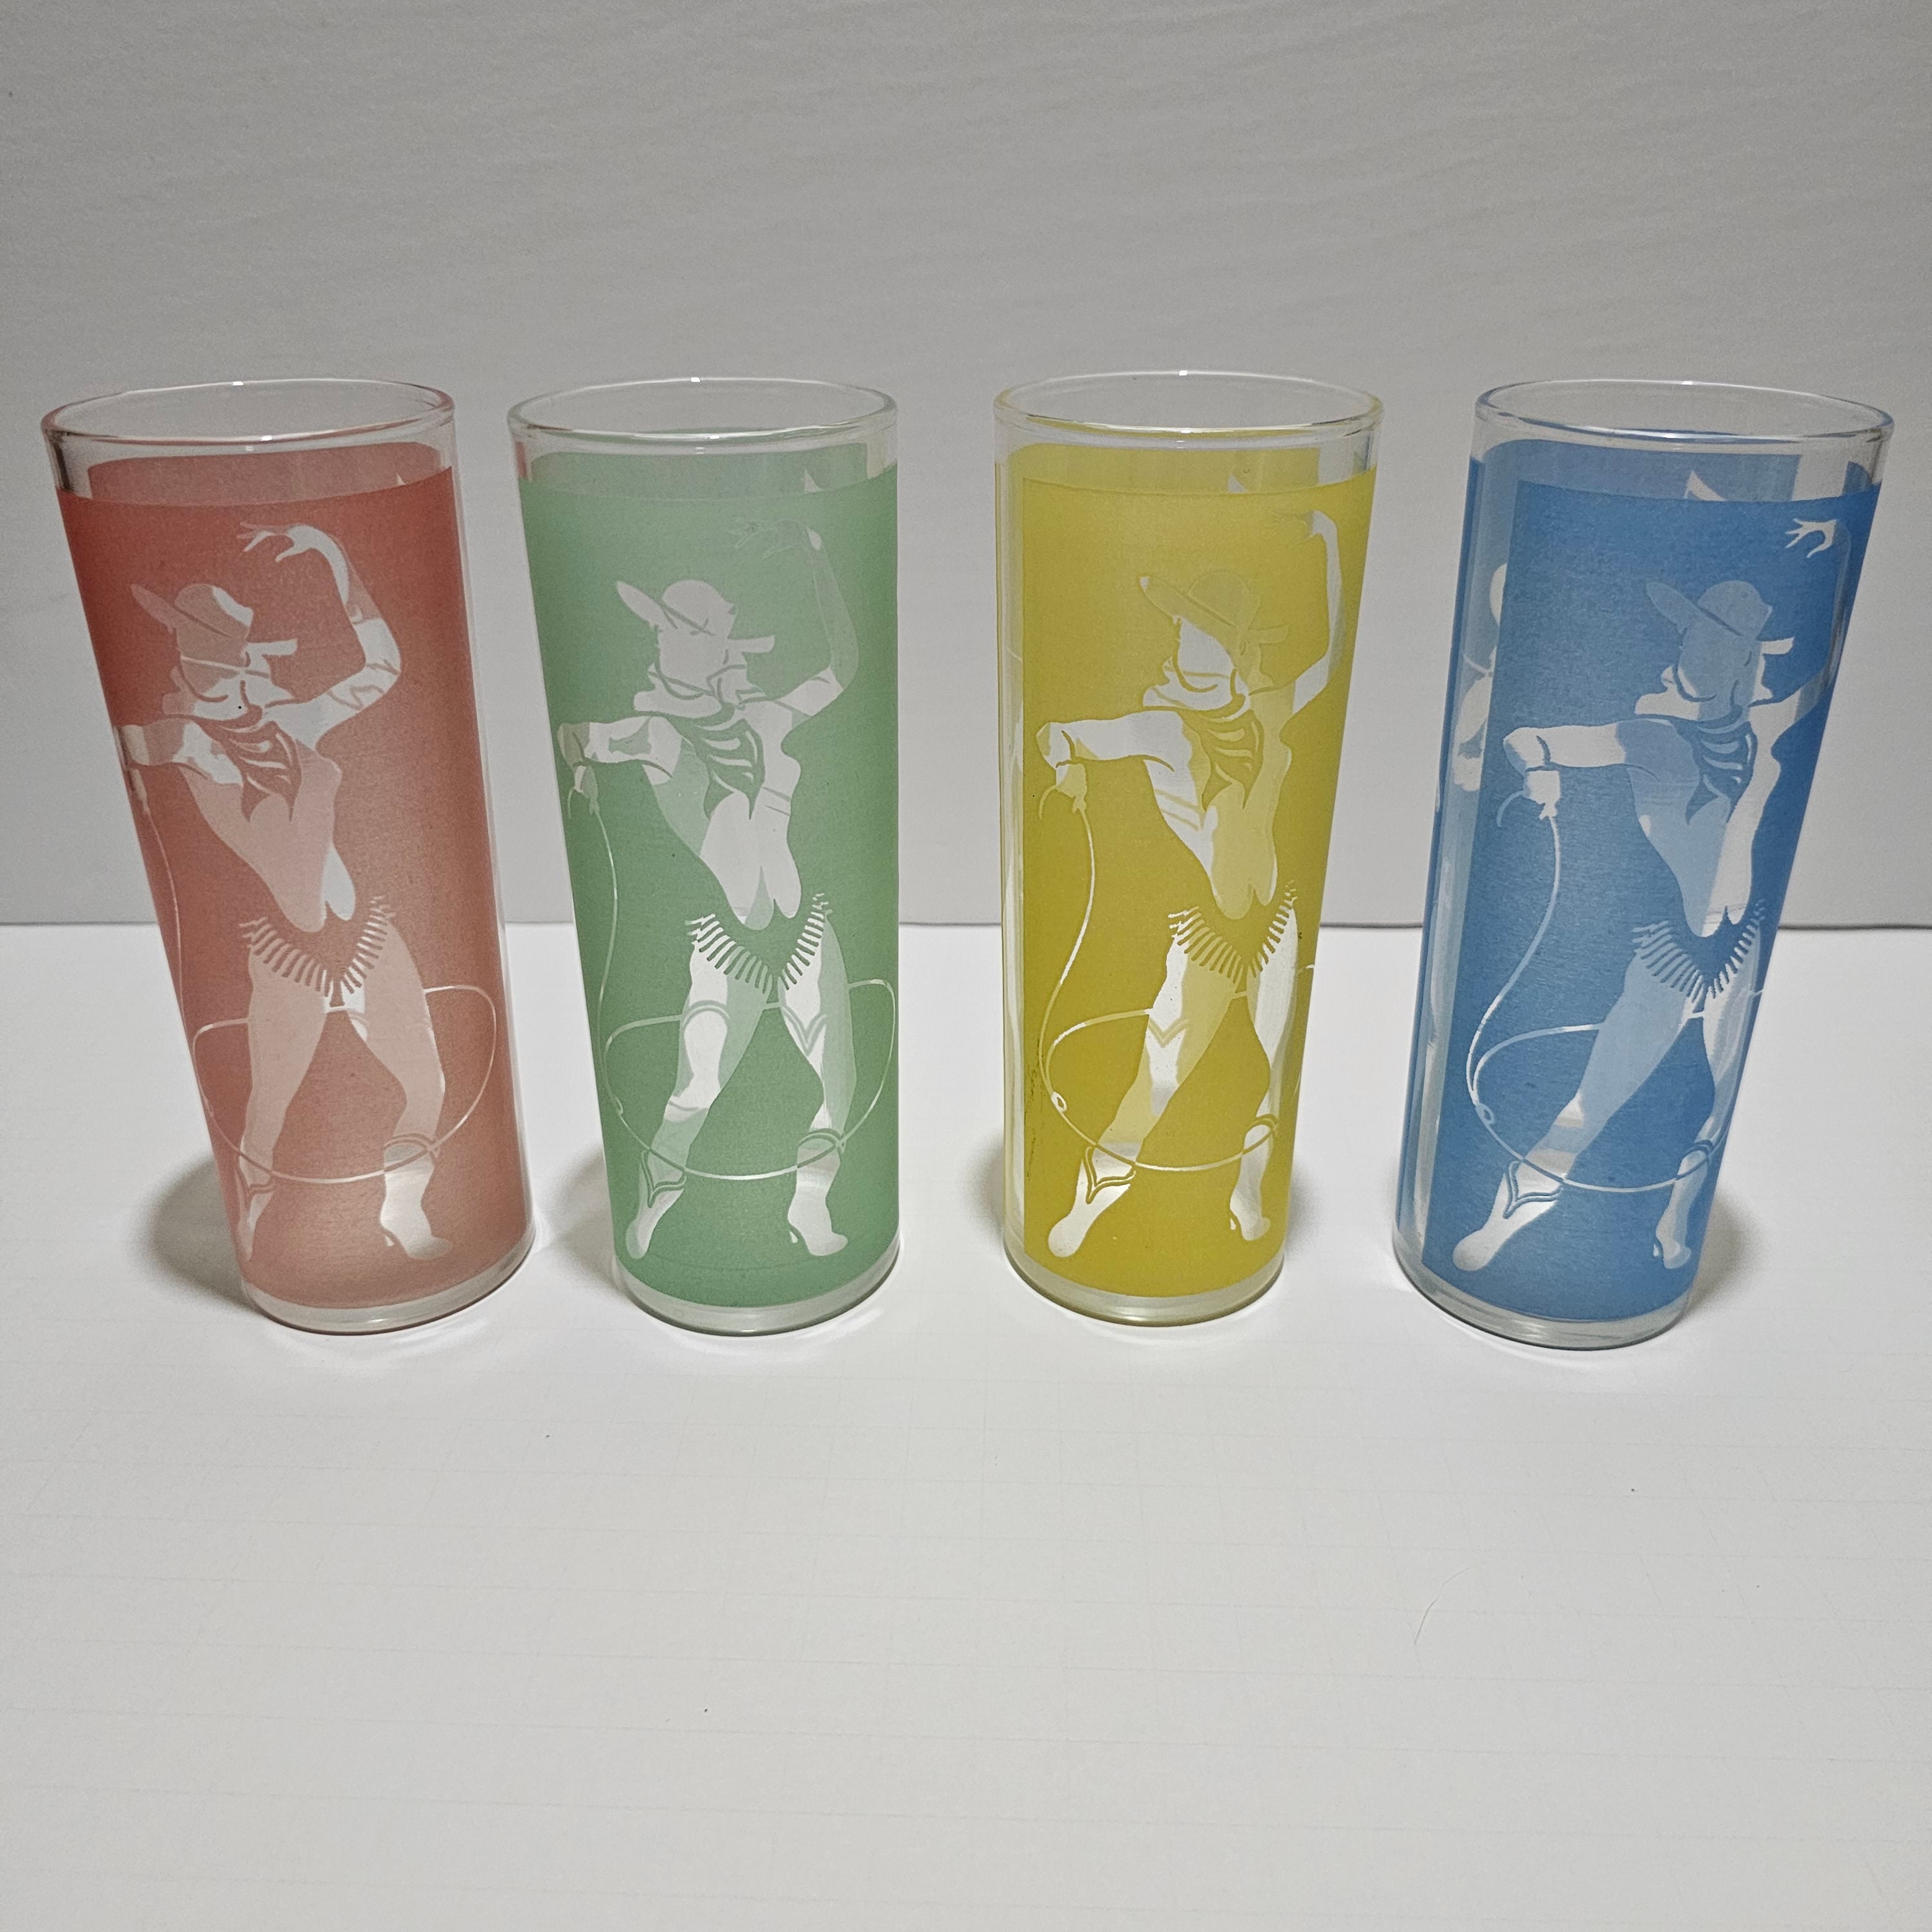 Vintage Light Blue Swirled Octagonal Tallboy Glass Cups Set of 4 